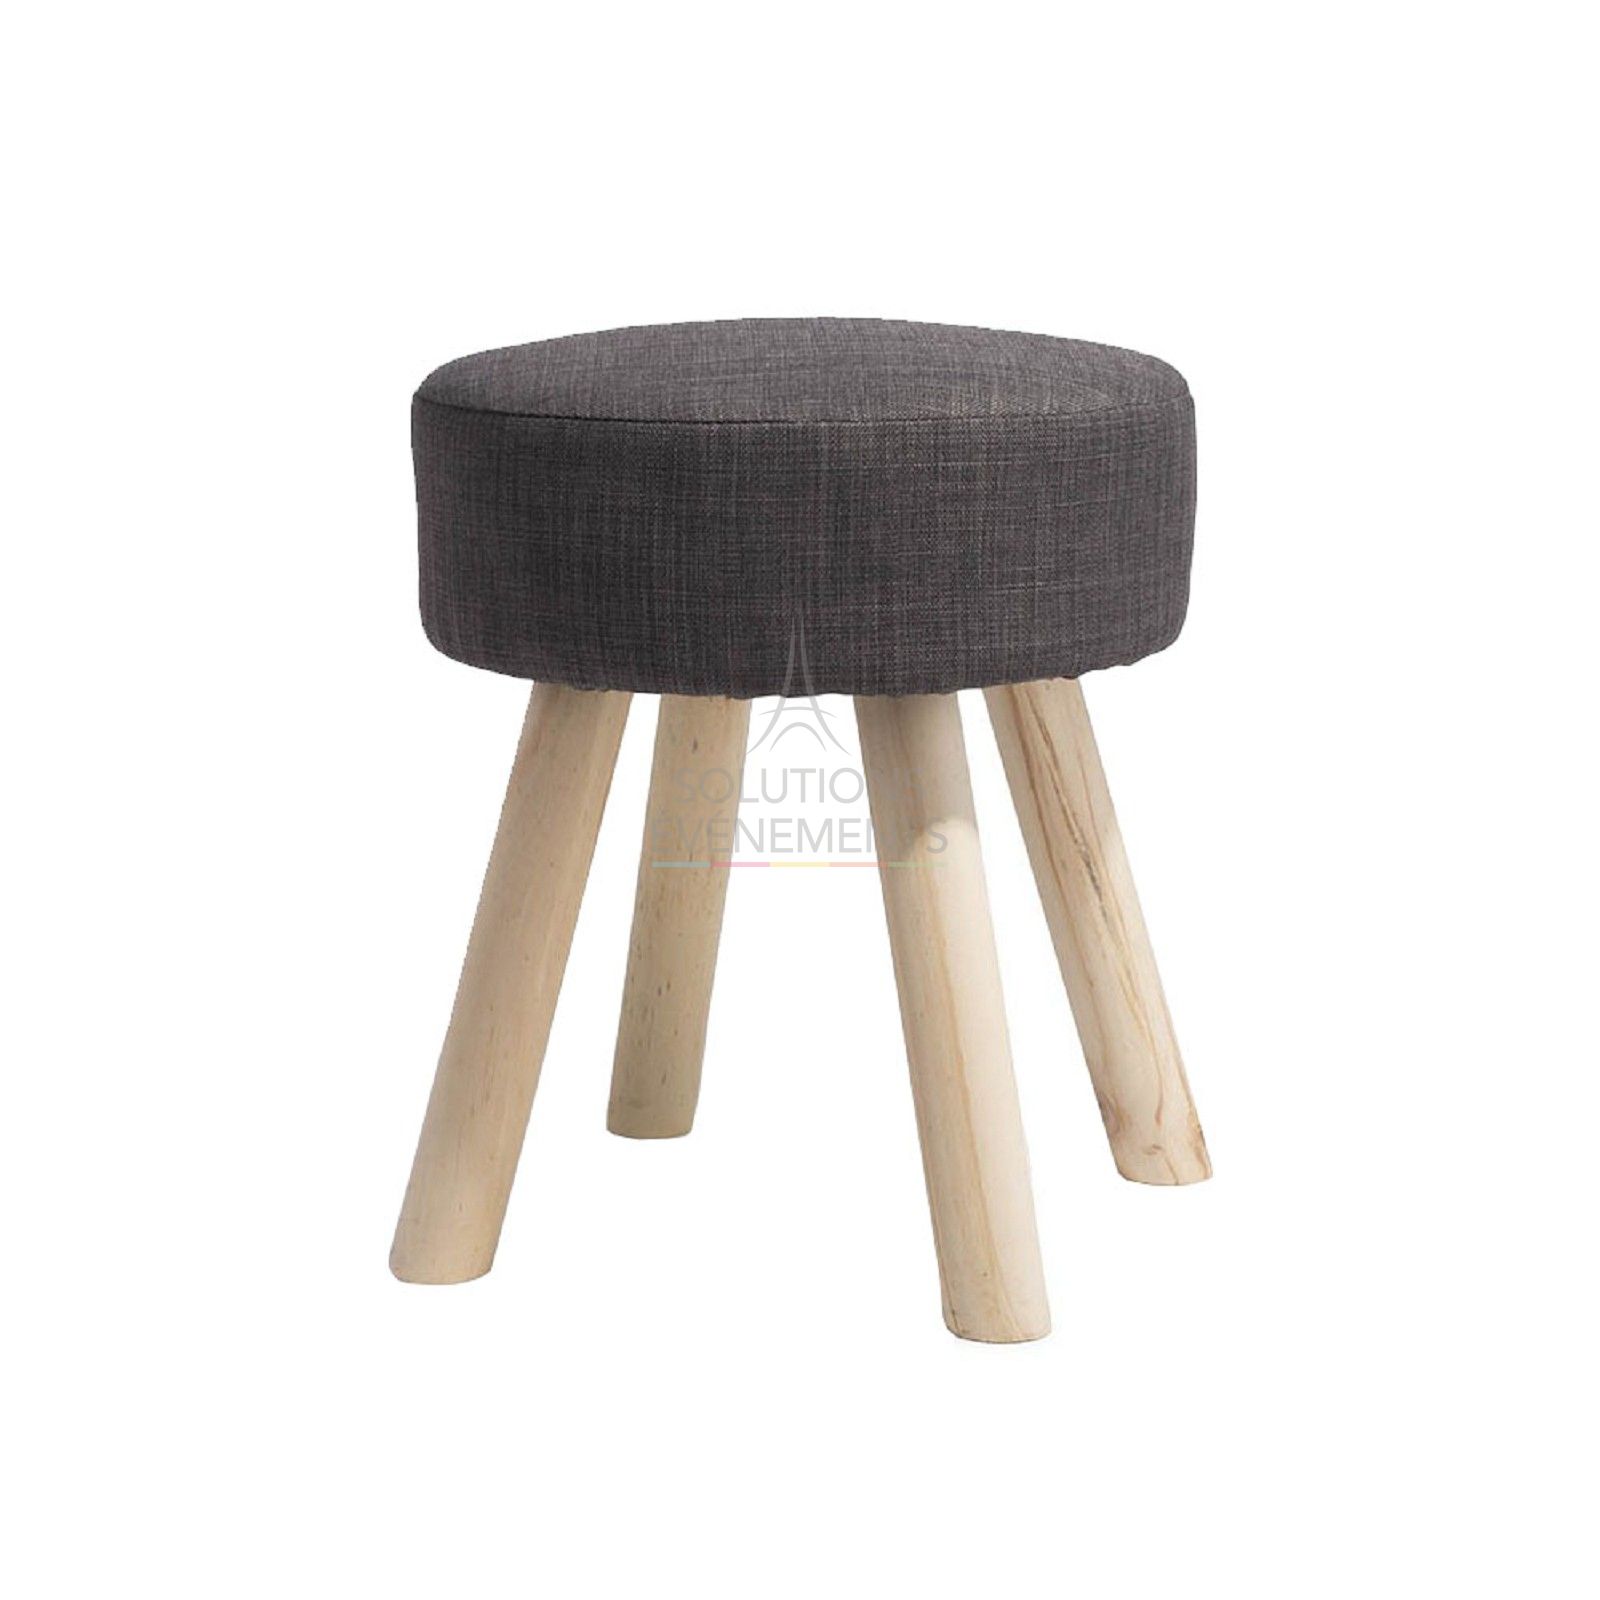 Rental of gray Scandinavian stool